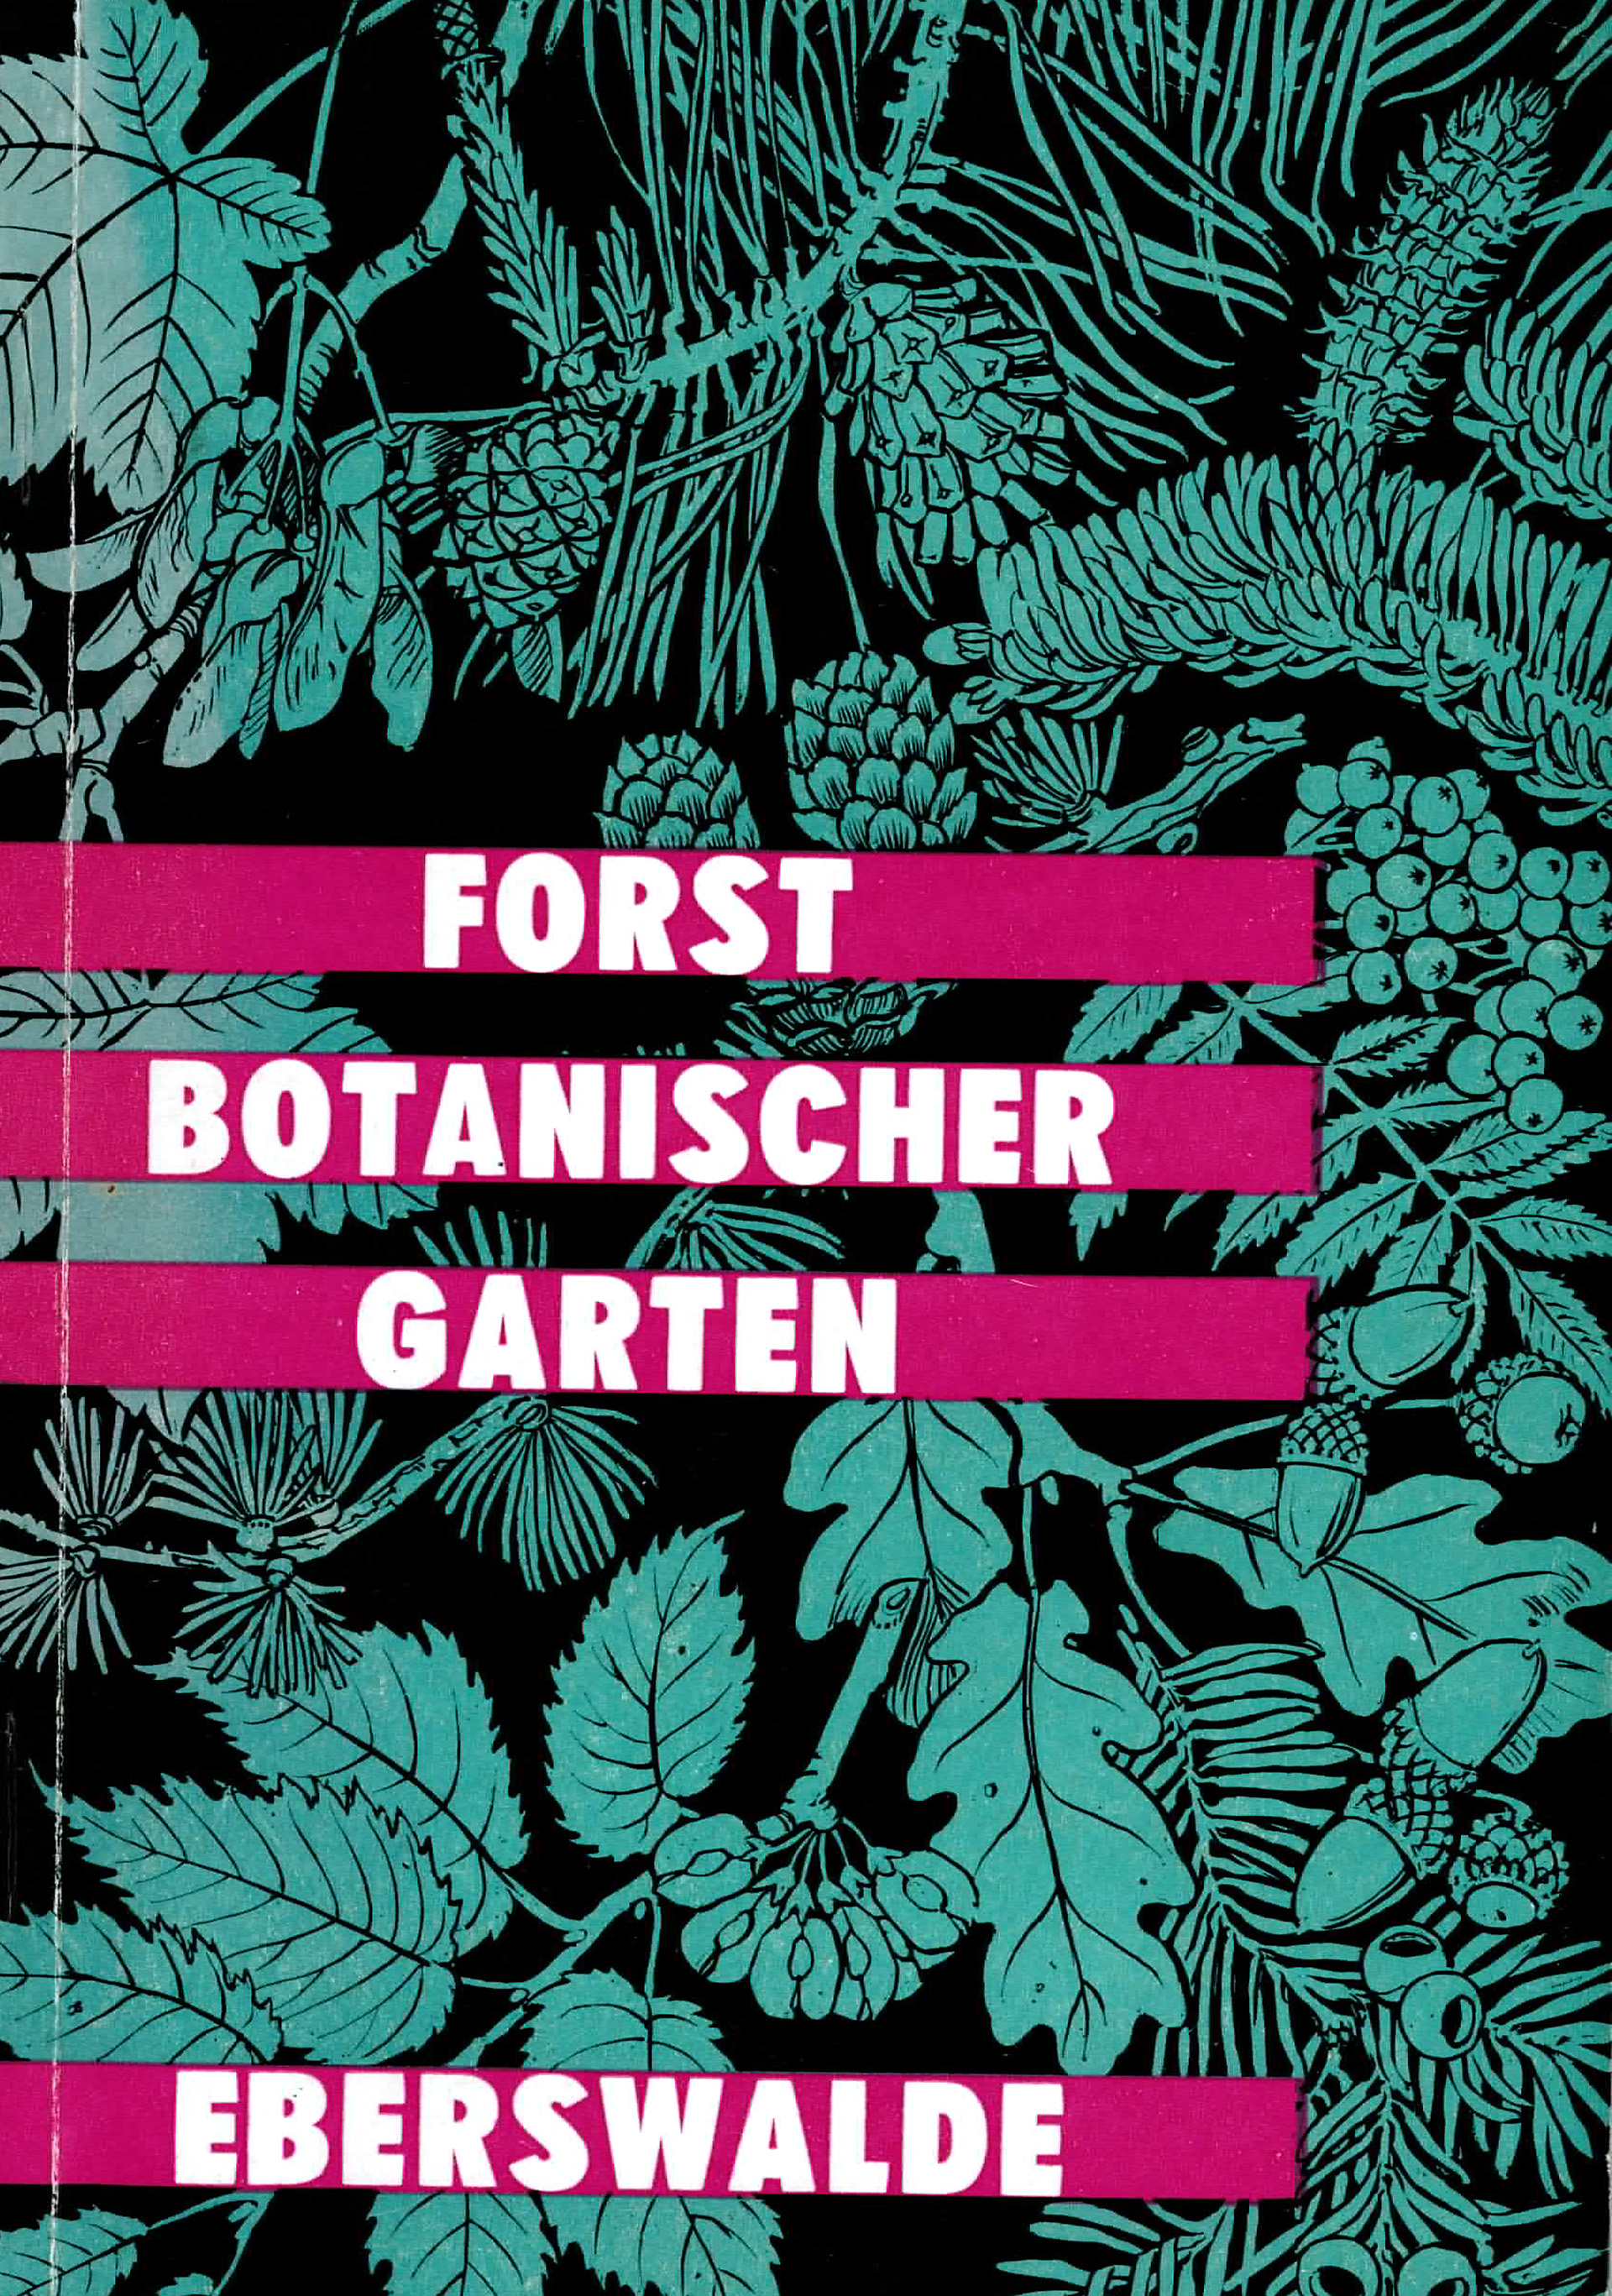 Forst Botanischer Garten Eberswalde - Dr. Seeliger, Ilse